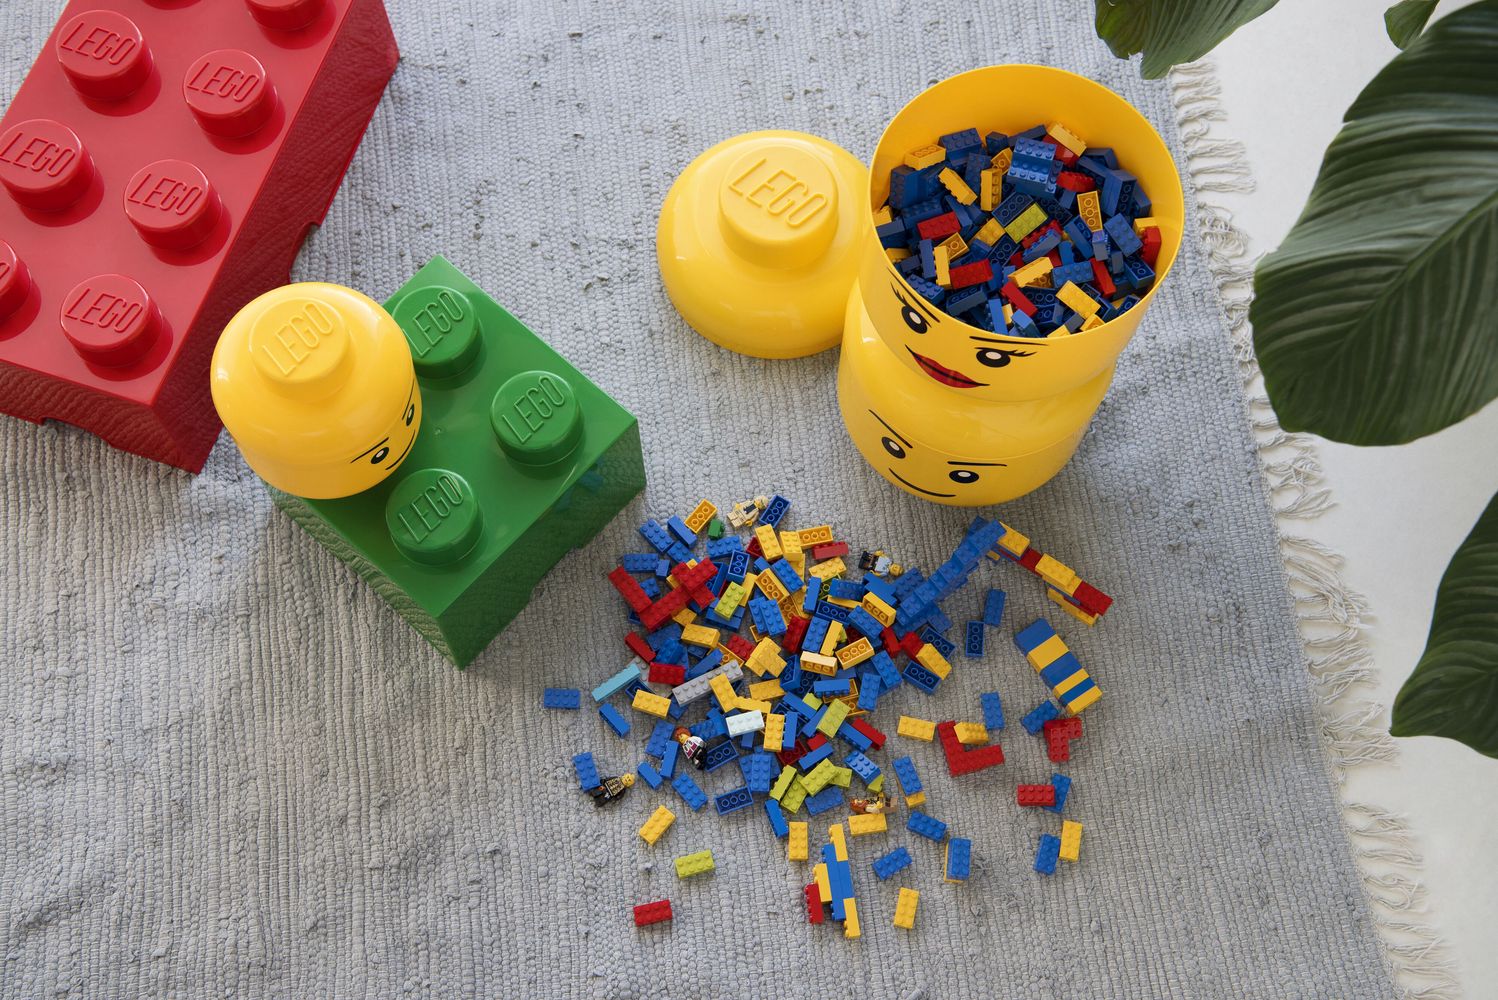 Boite rangement LEGO Tête Whinky Ø 24 x 27.1 cm ?